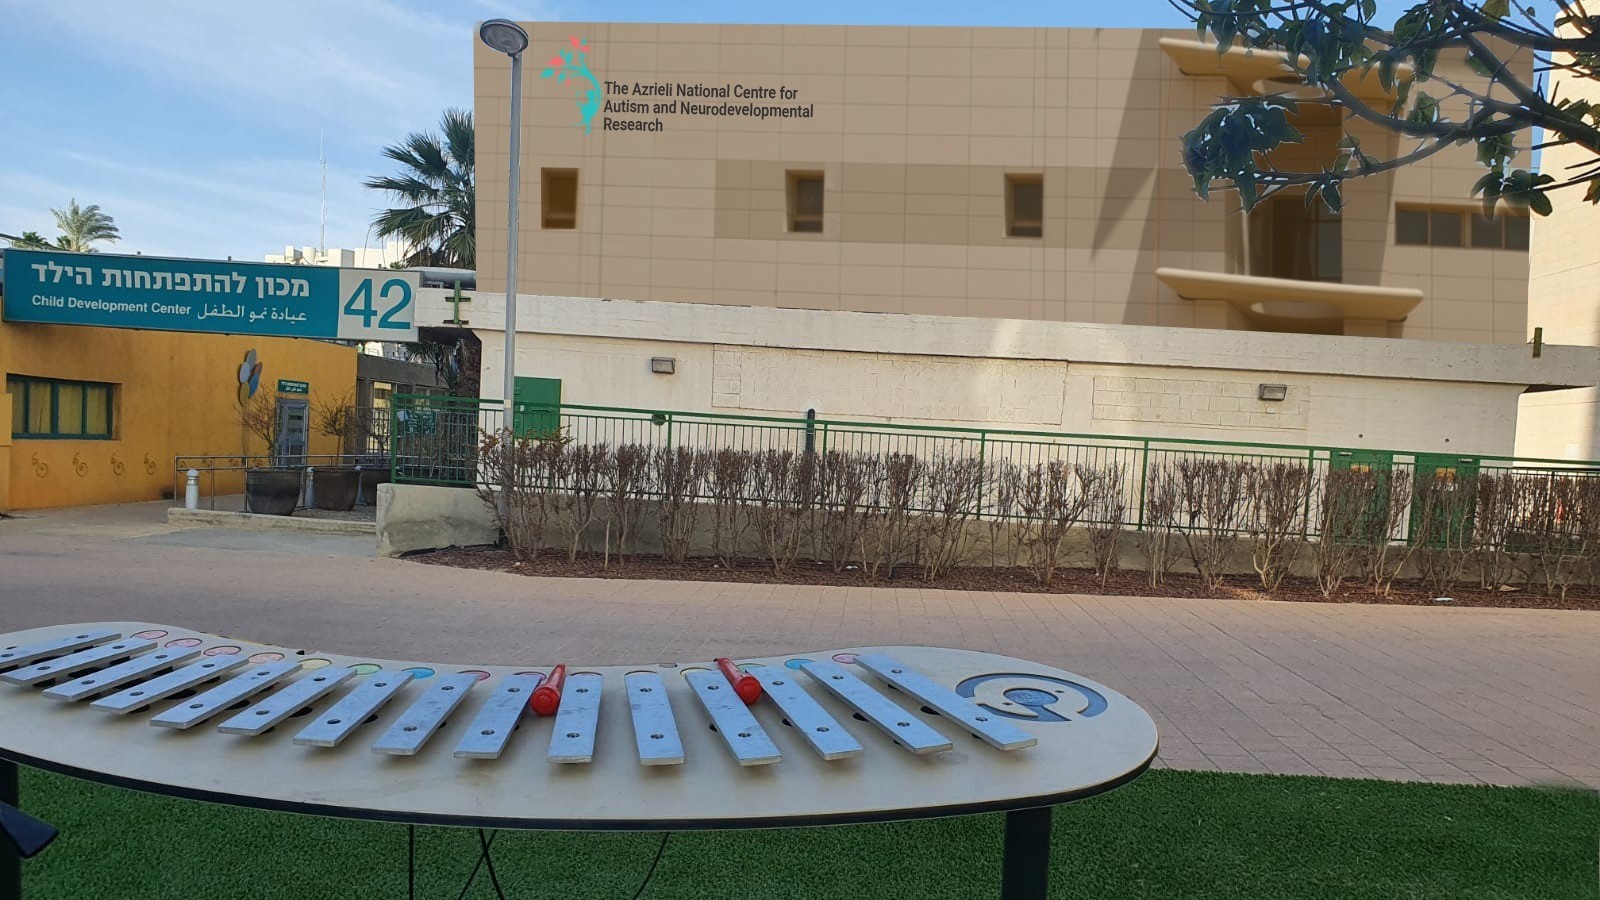 An illustration of the future Azrieli National Centre for Autism and Neurodevelopmental Research. Photo courtesy of Ben-Gurion University/Soroka University Medical Center